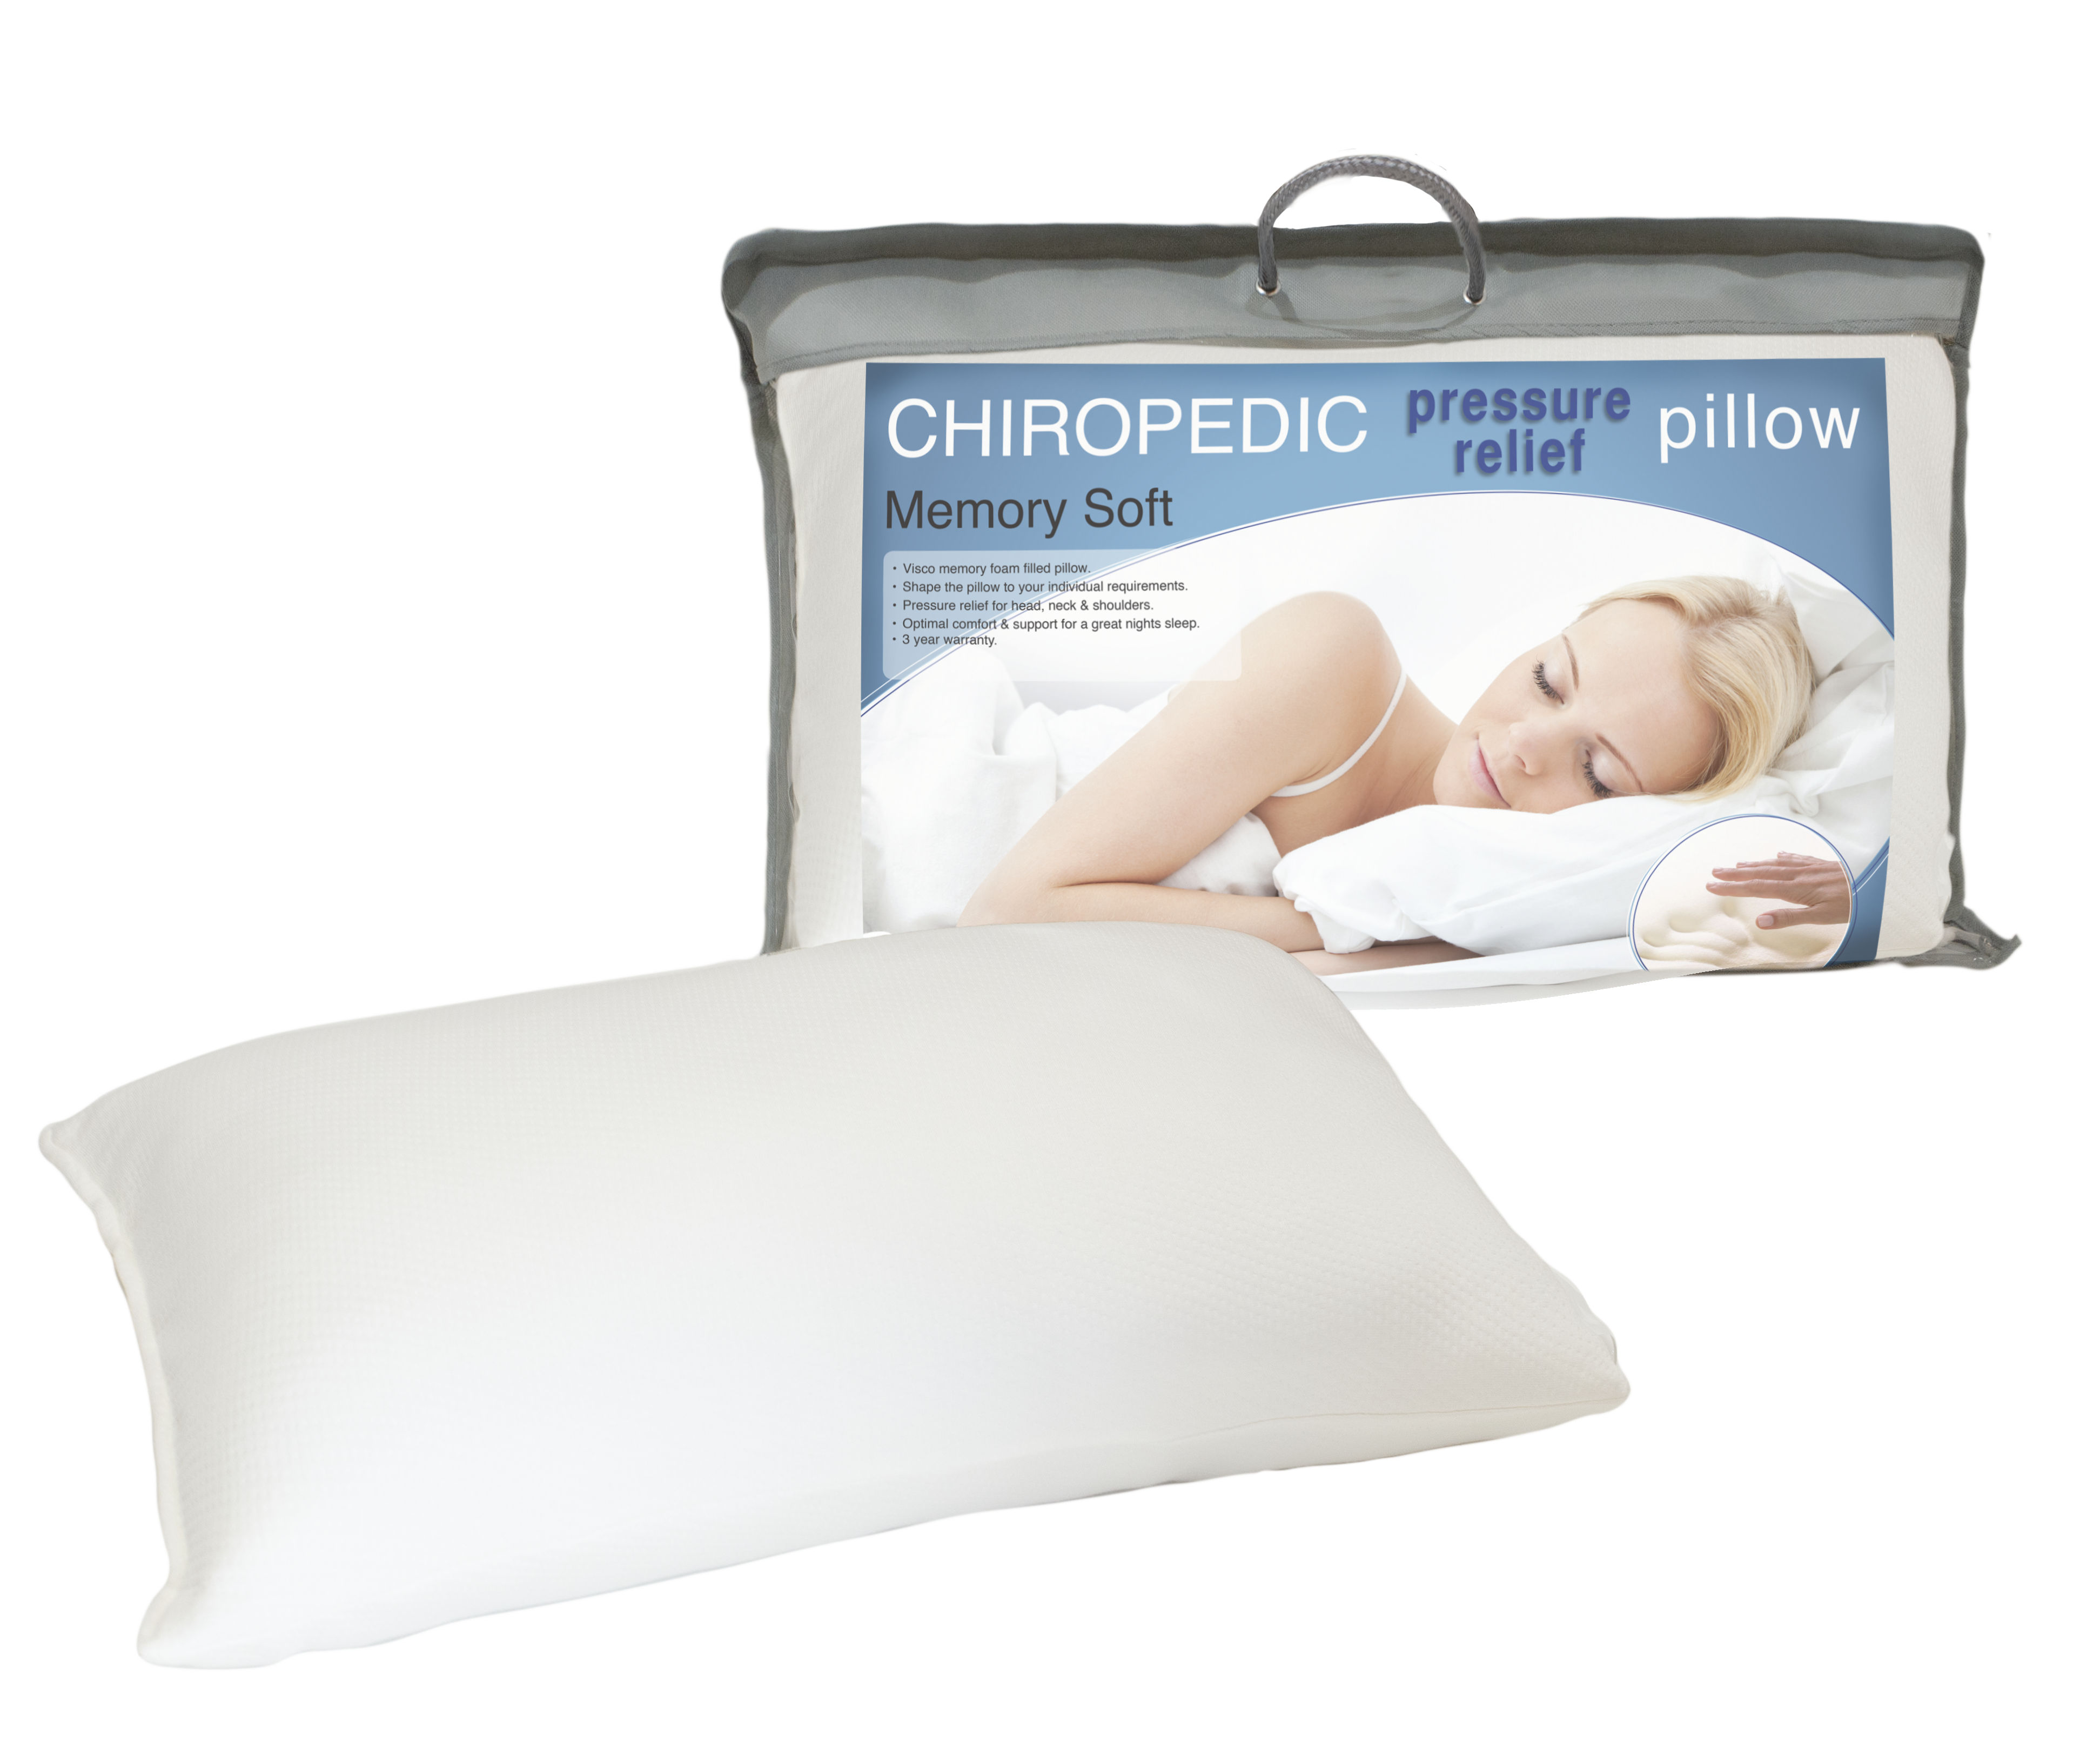 Chiropedic-Pressure-Relief-pillow-Memory-Soft-1